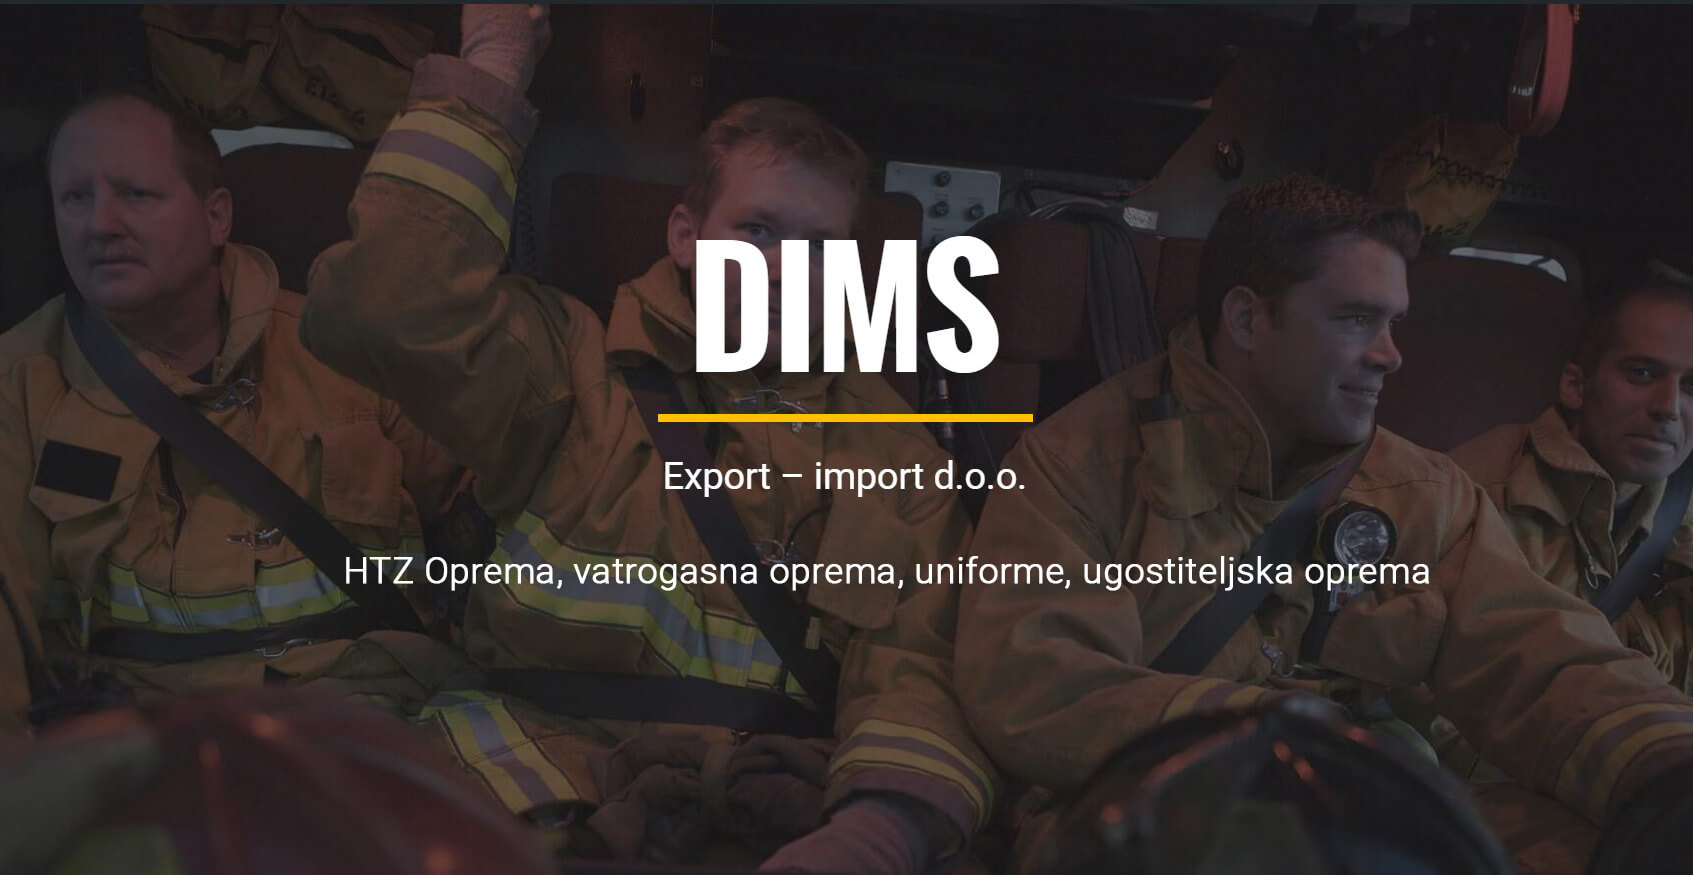 DIMS export